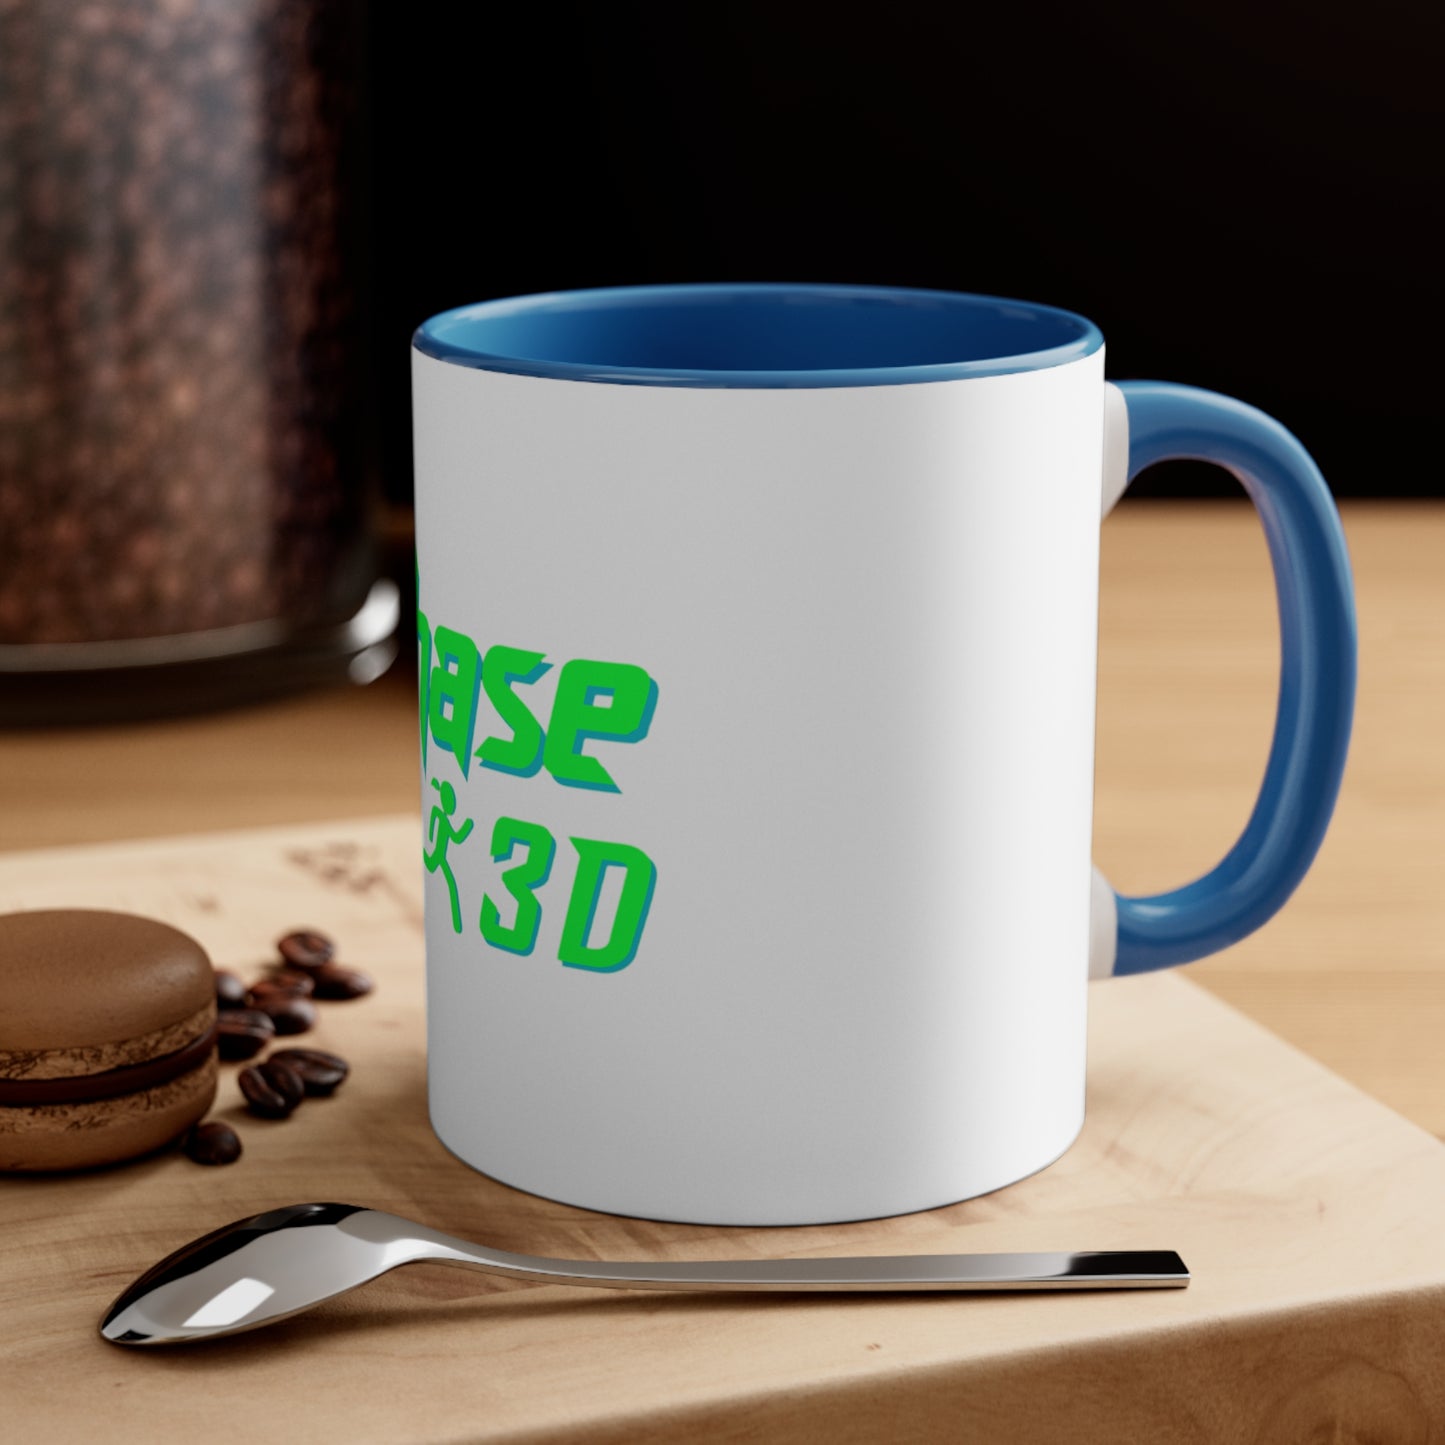 Chase Coffee Mug, 11oz